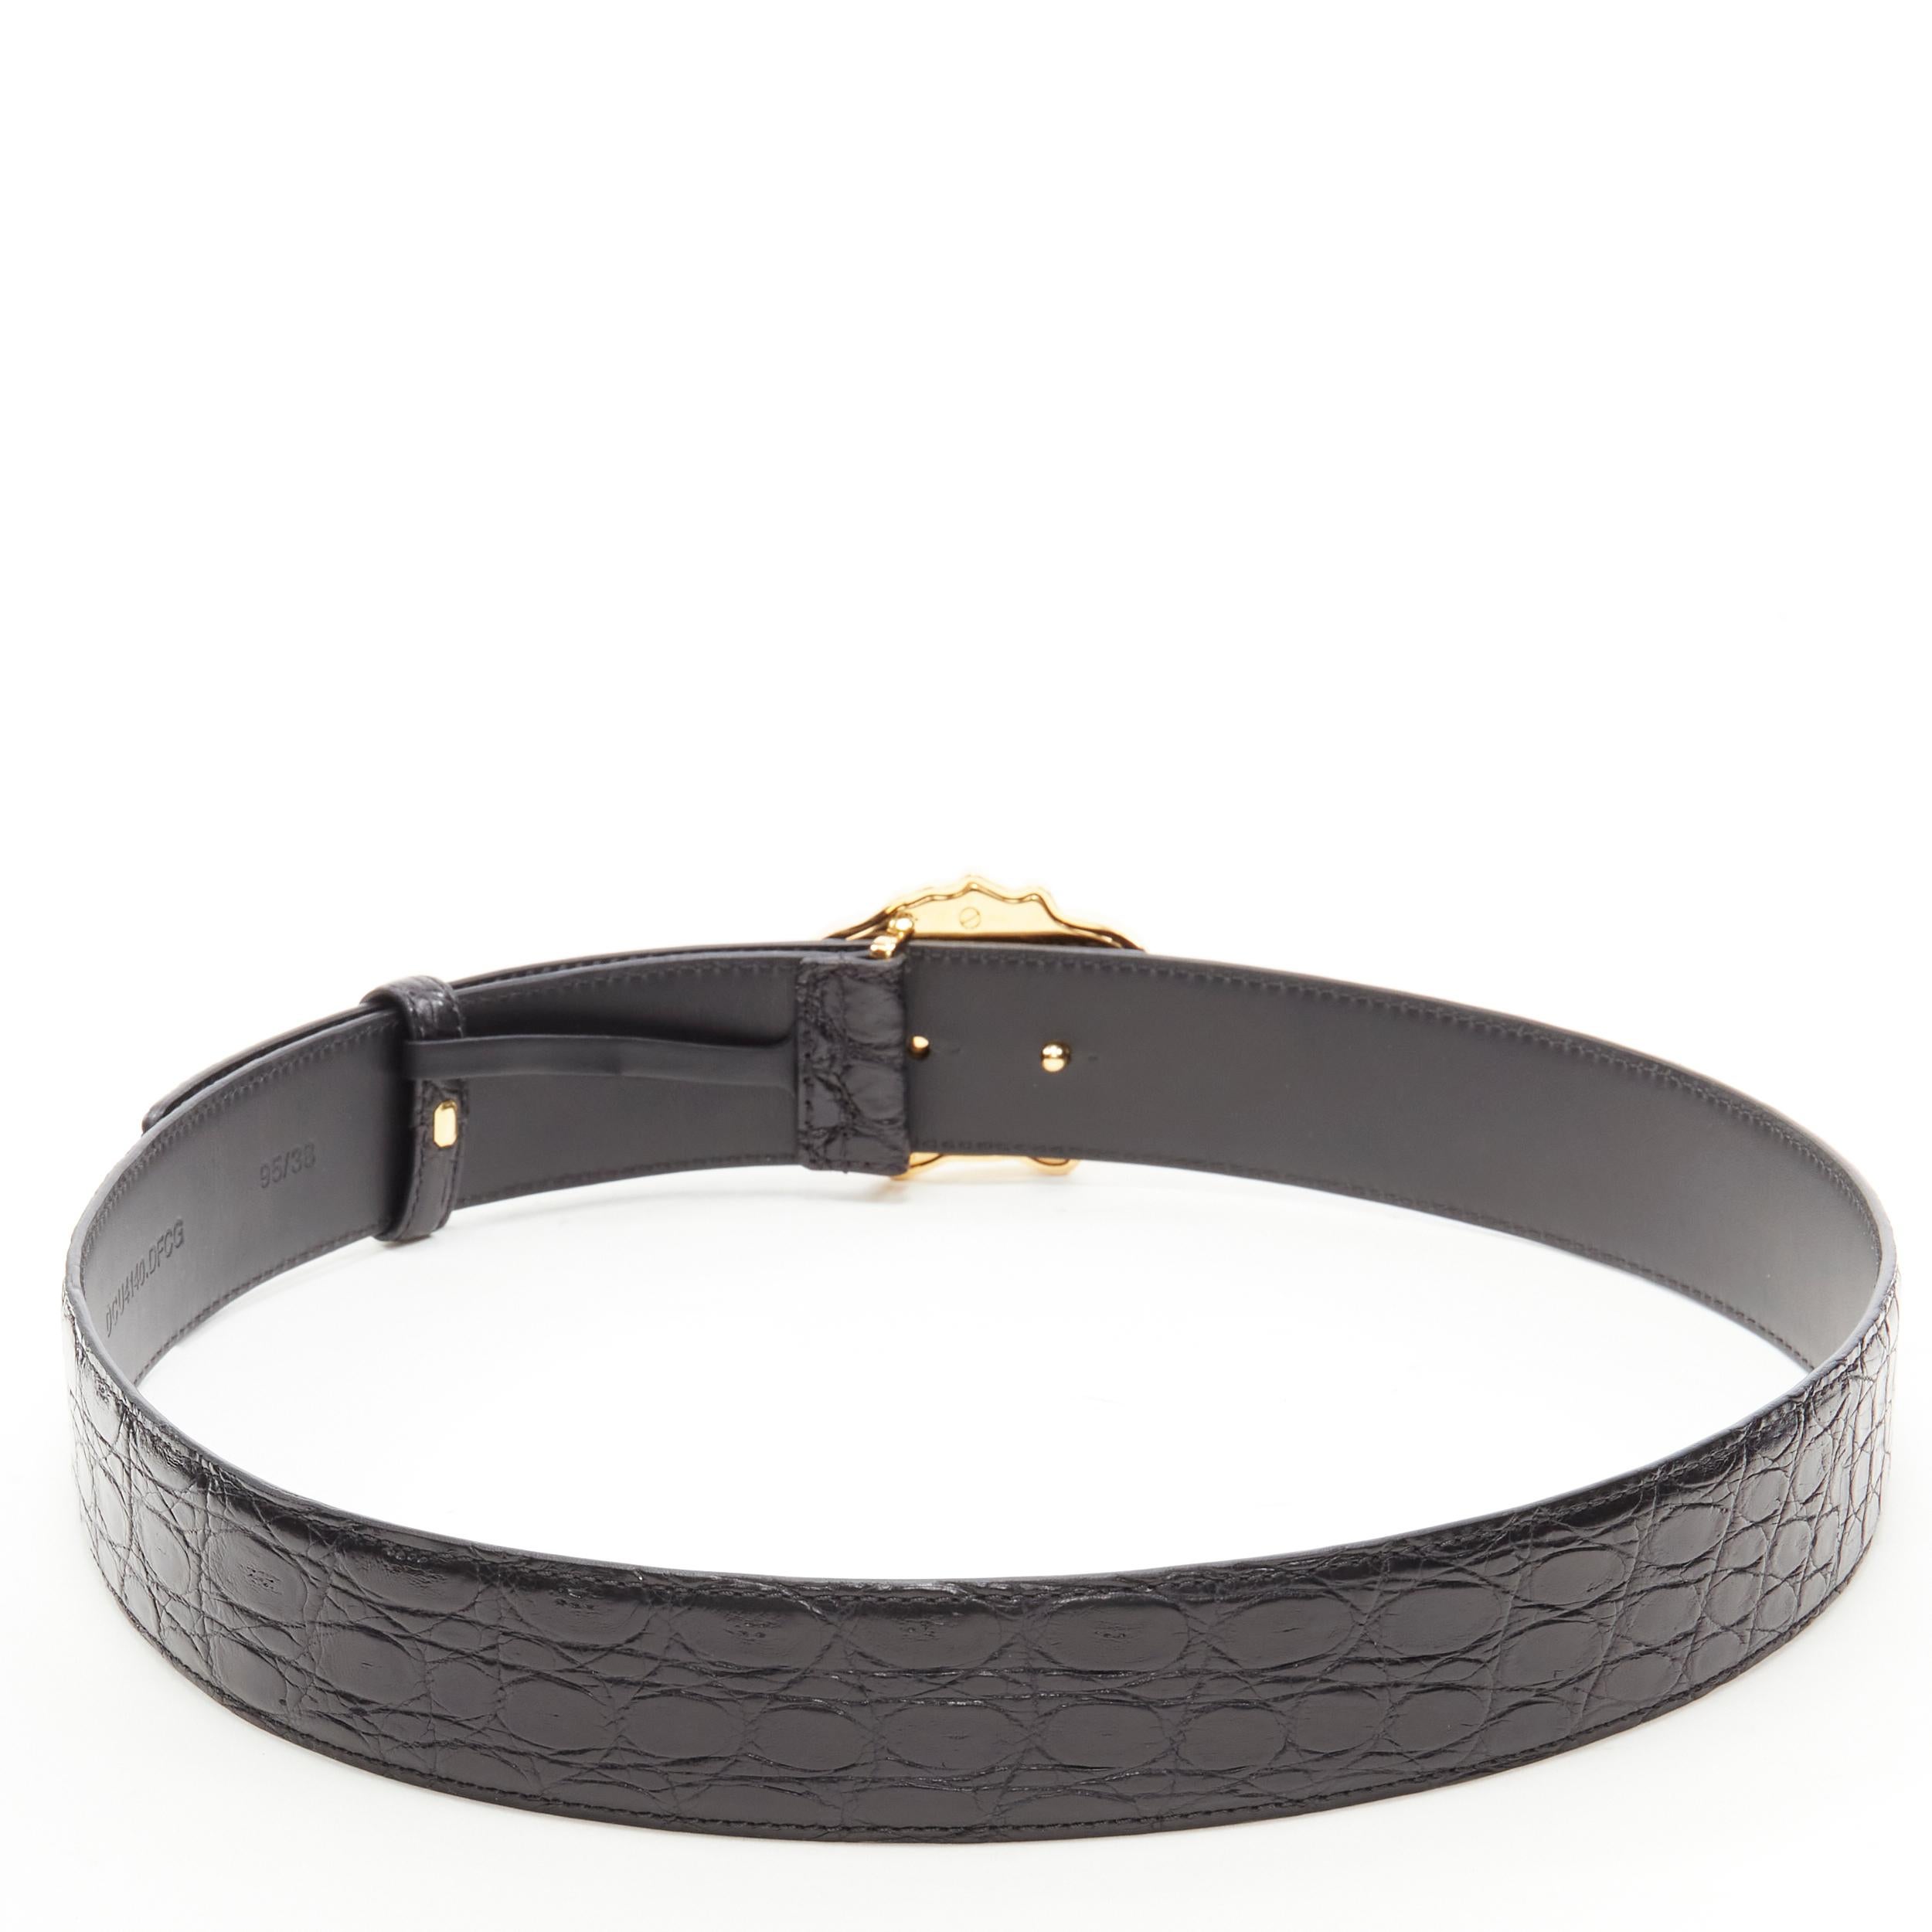 Black new VERSACE $1200 La Medusa gold buckle black croc leather belt 80cm 30-34